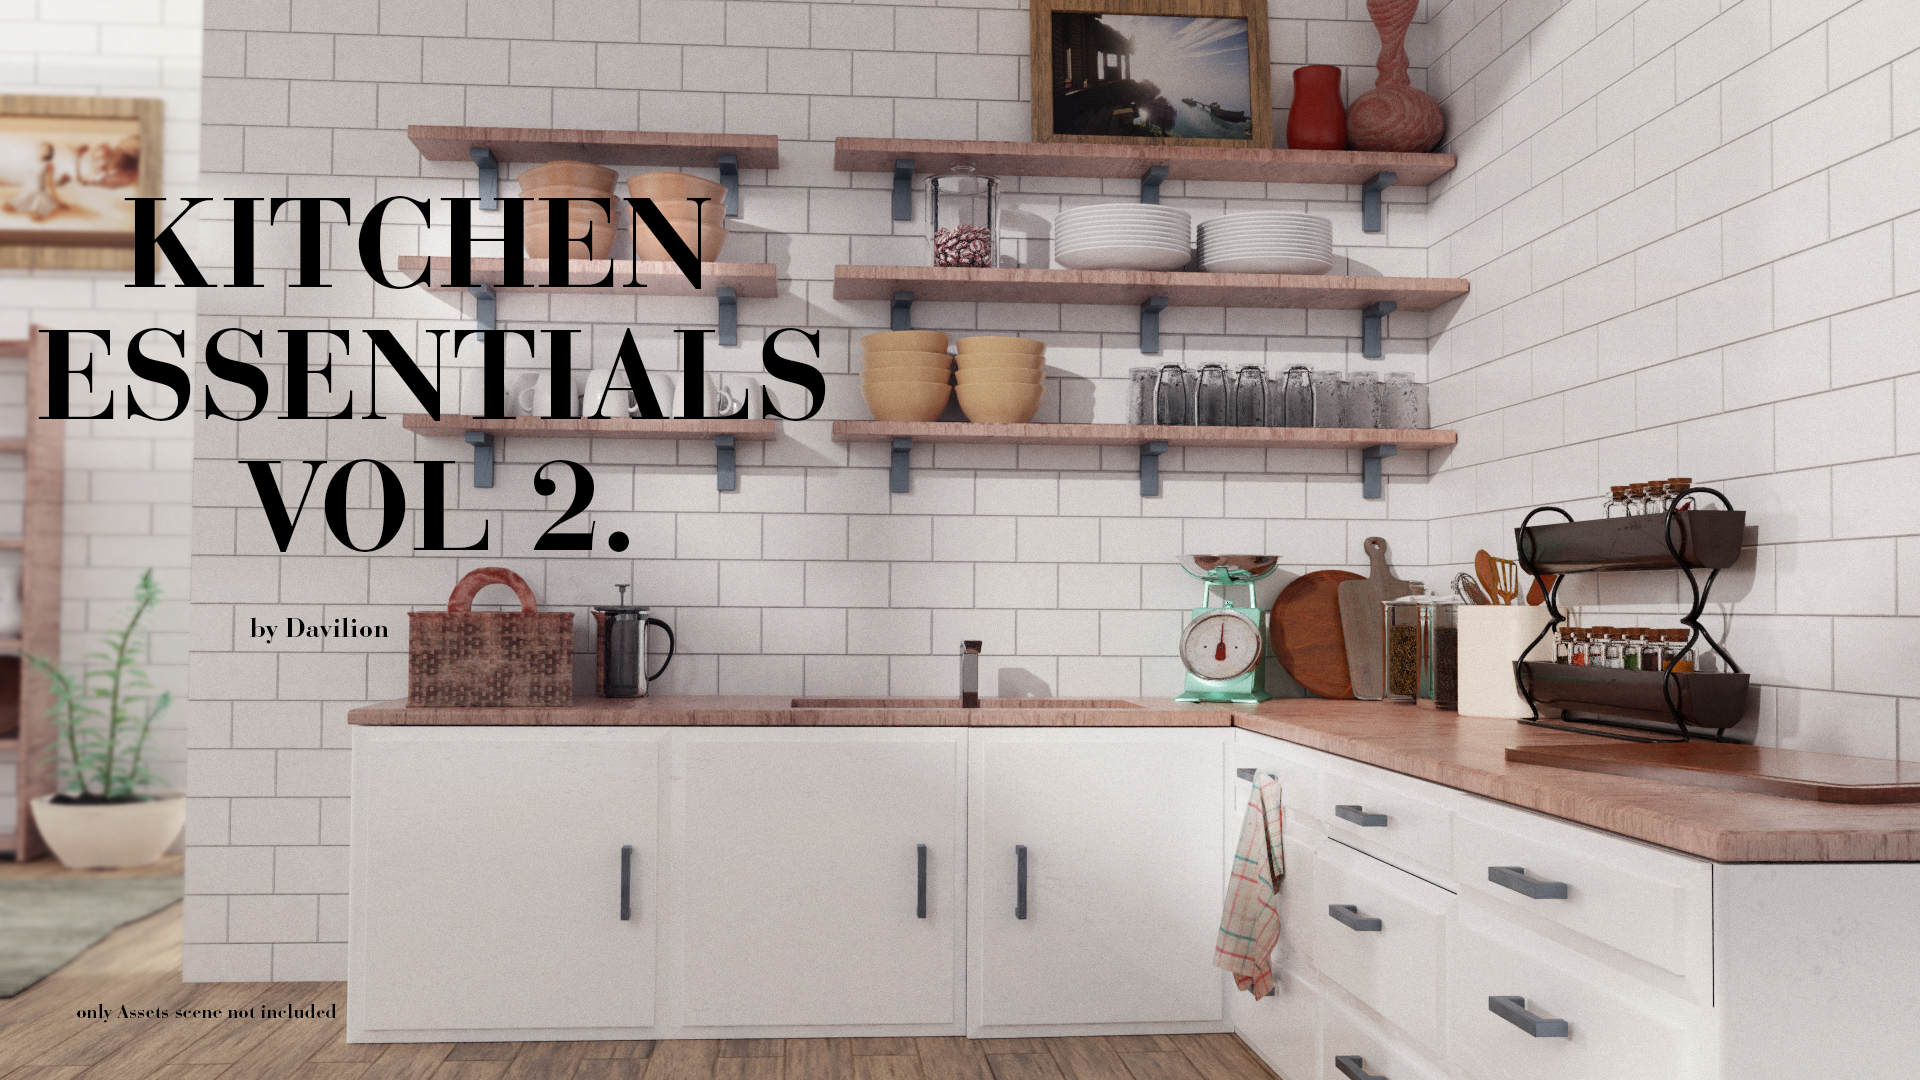 Vol2. Kitchen Essentials Asset Pack by Davilion preview image 1